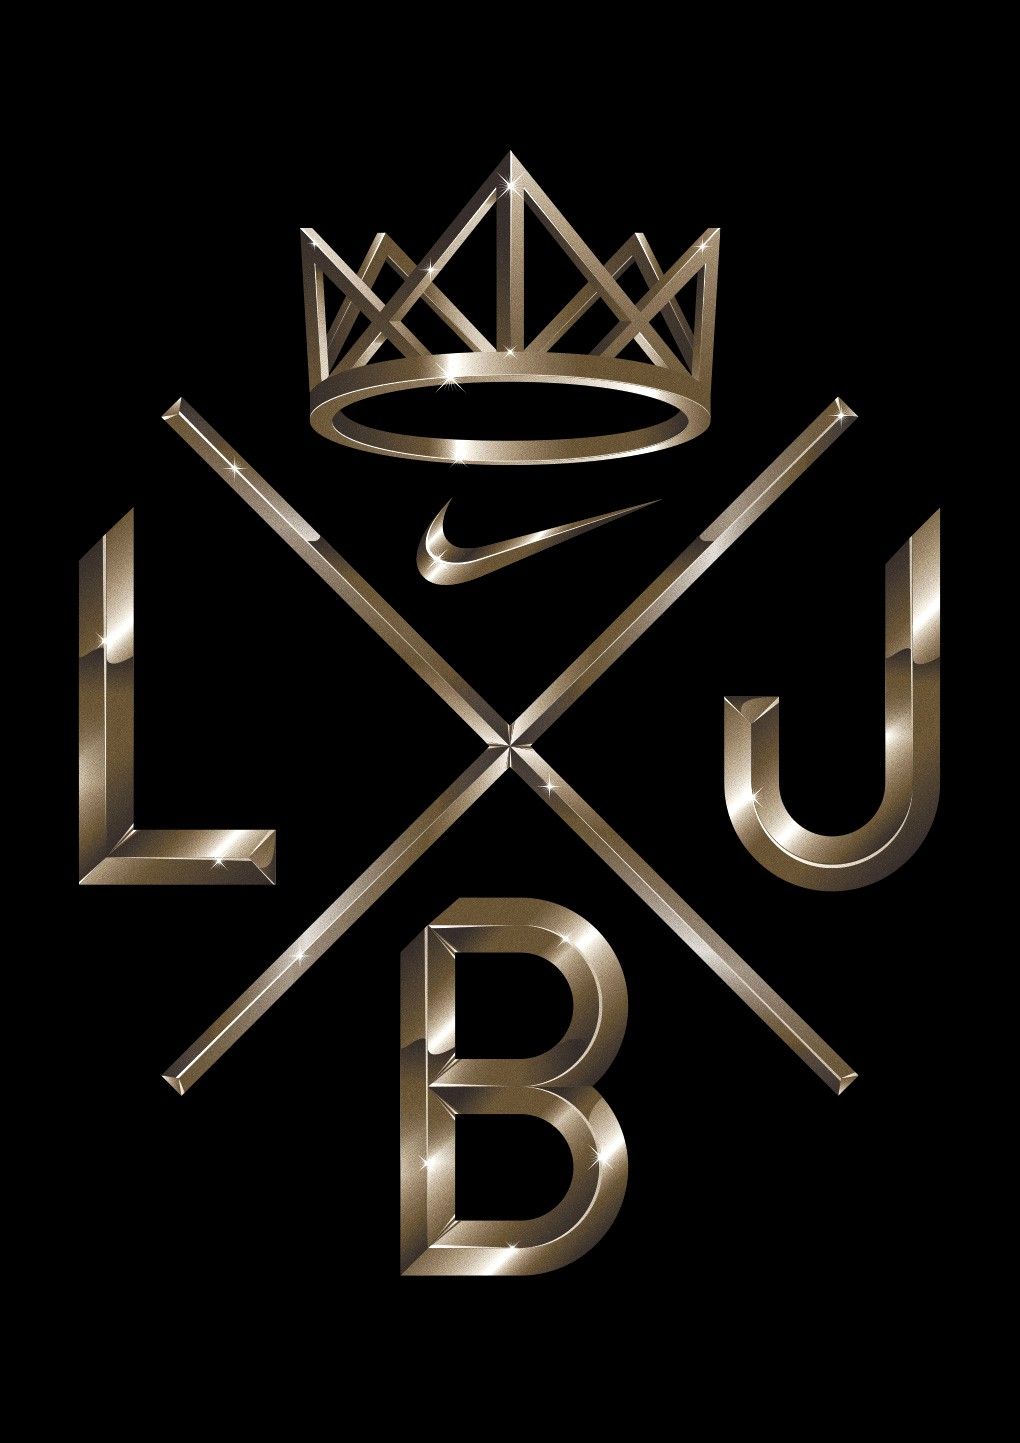 lebron james logo wallpaper iphone